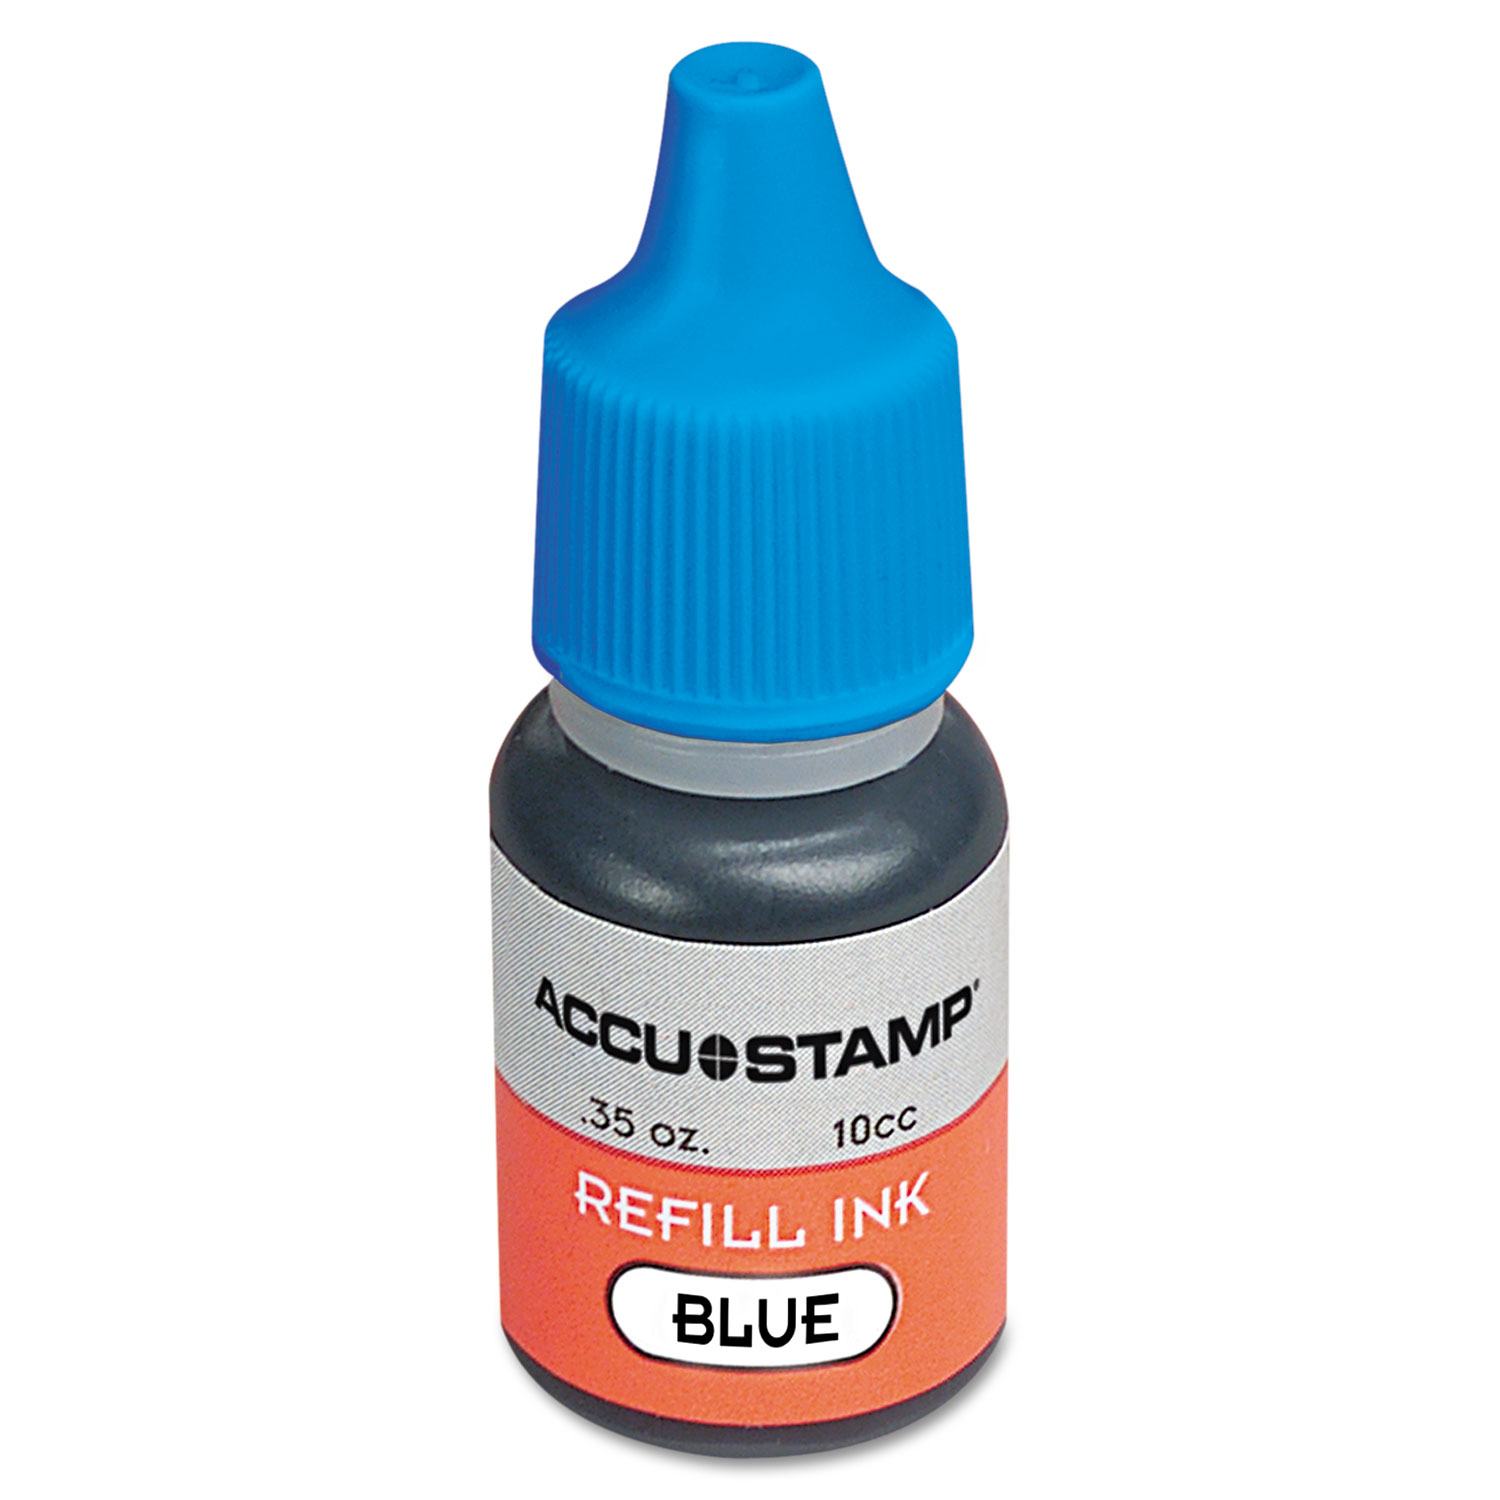 ACCU-STAMP Gel Ink Refill, Blue, 0.35 oz Bottle